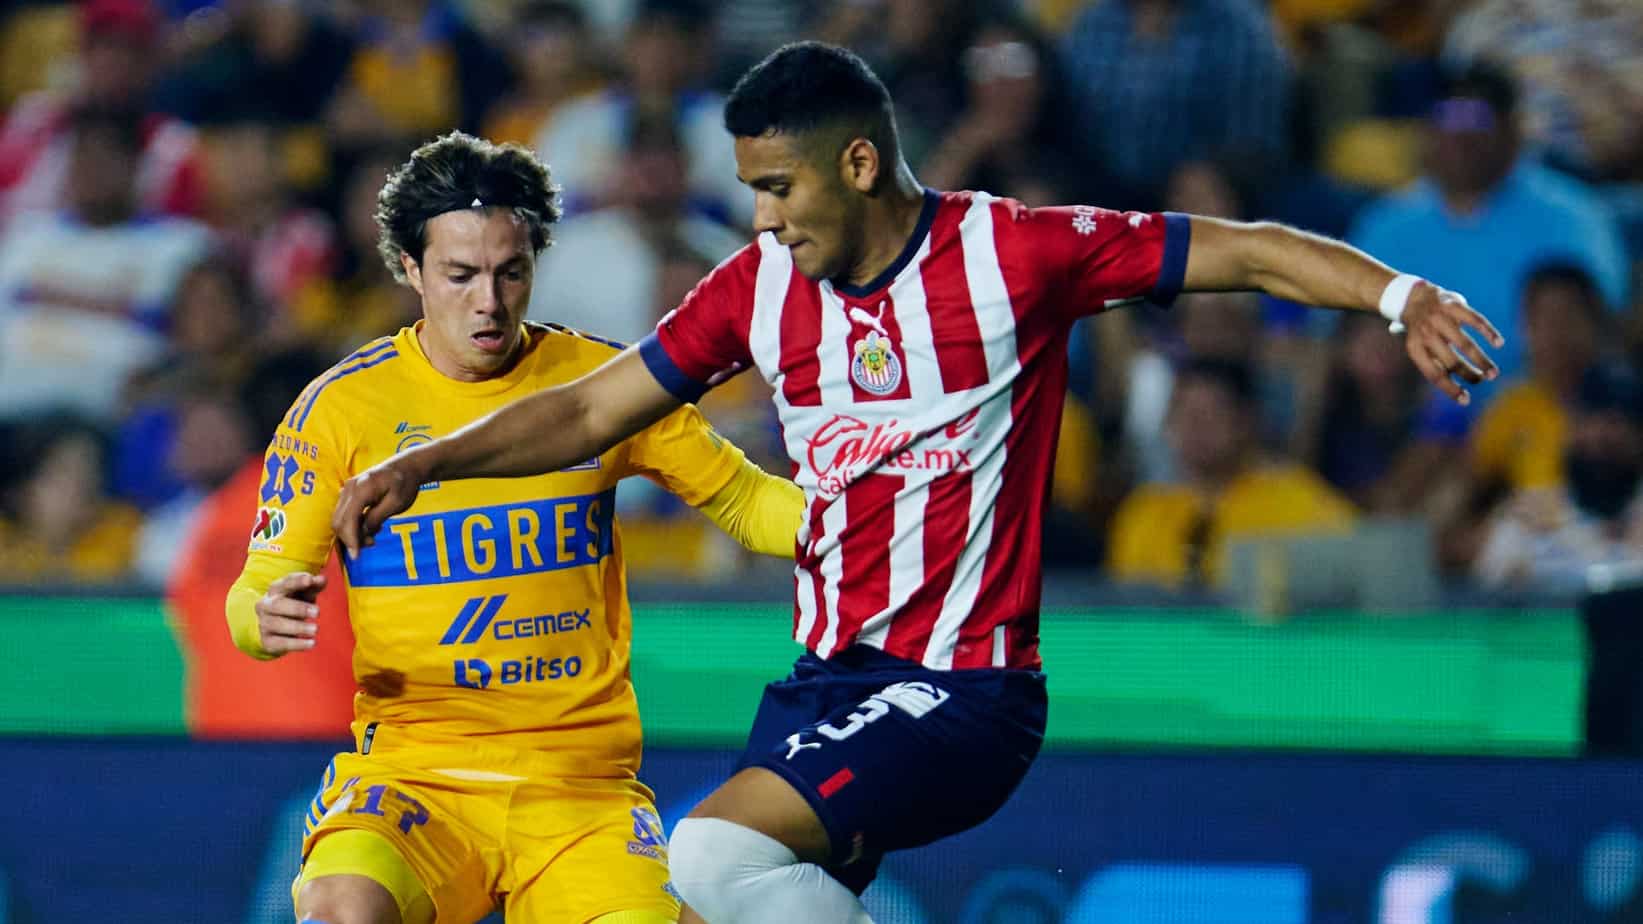 Liguilla Finals Second Leg: Chivas vs. Tigres Preview